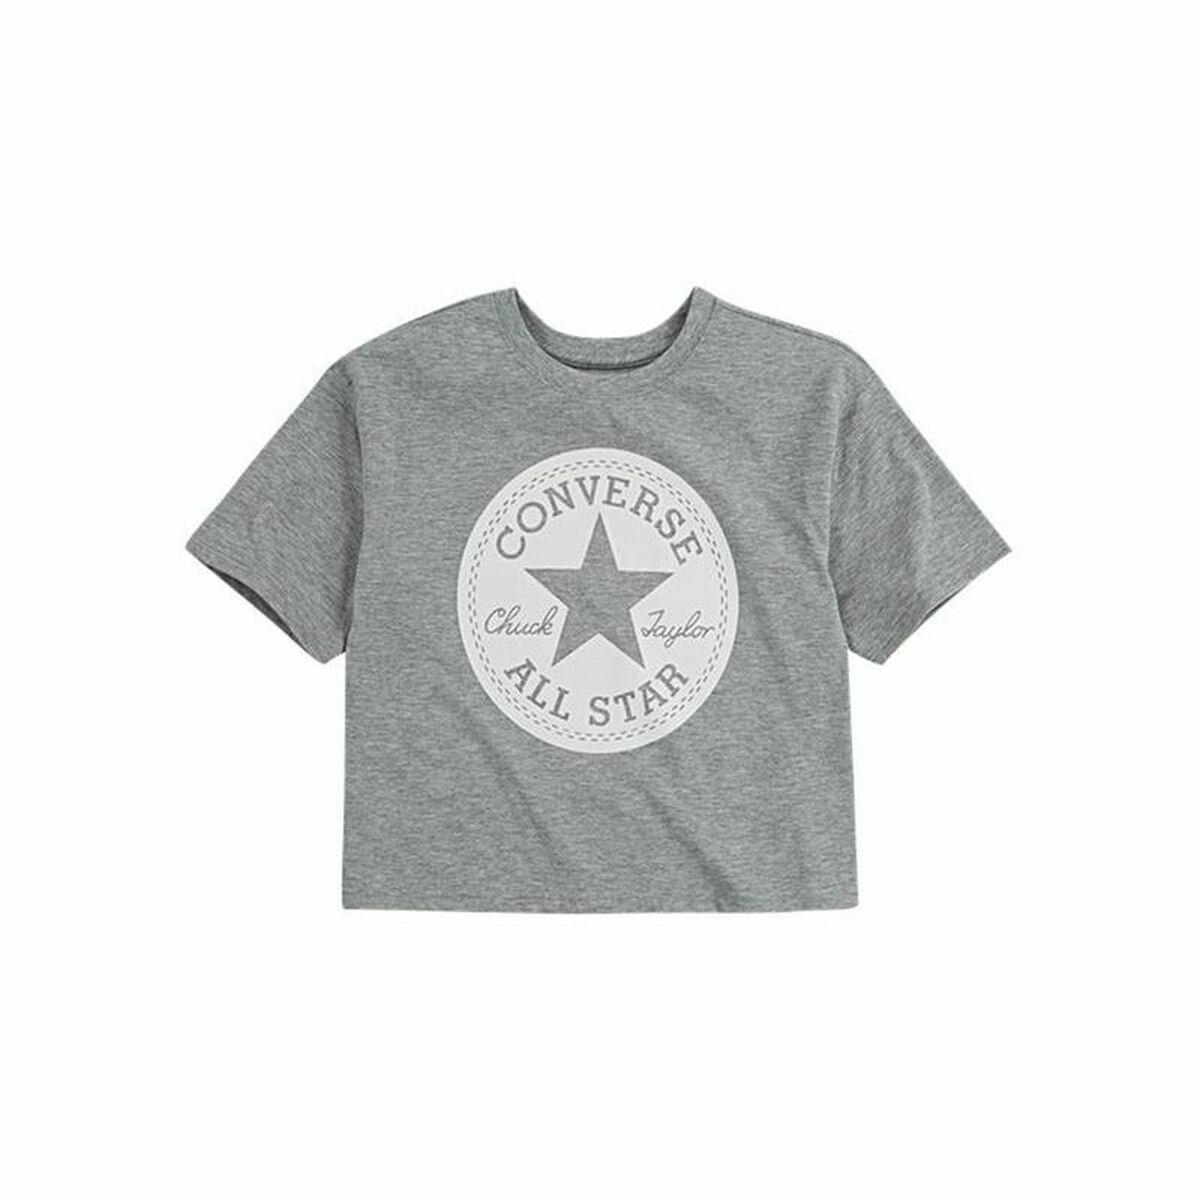 Kurzarm-T-Shirt für Tomorrow, - Kitsch Grau Café Café ehemals Converse Boxy Patch Chuck Kinder